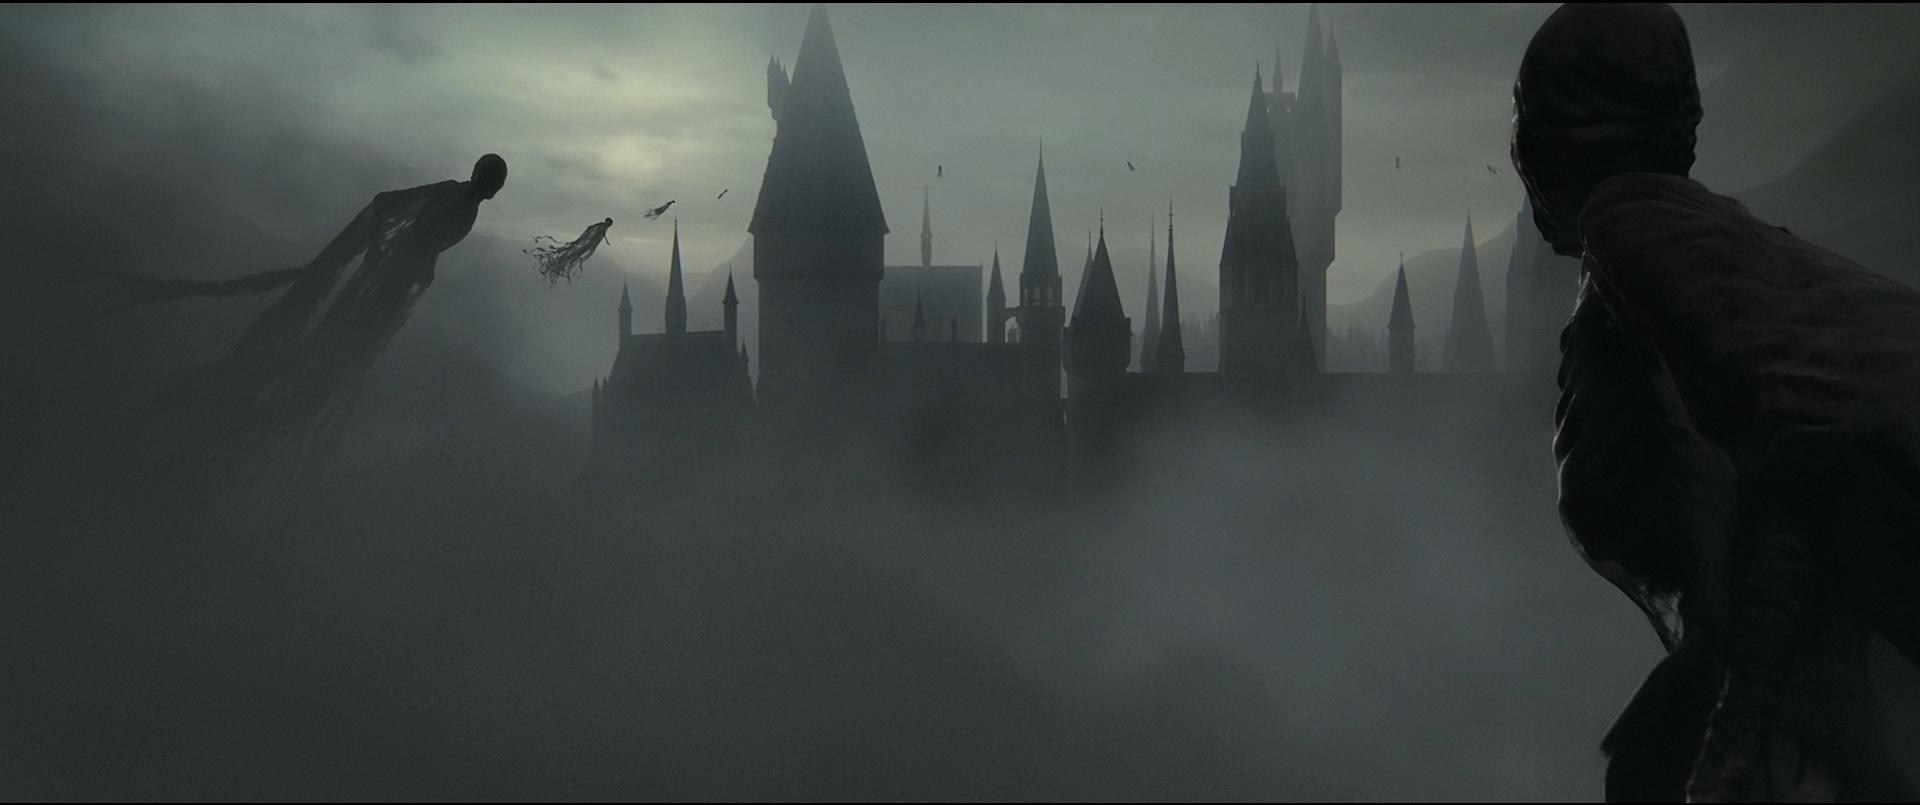 Harry Potter 7-2  - Fotogramas